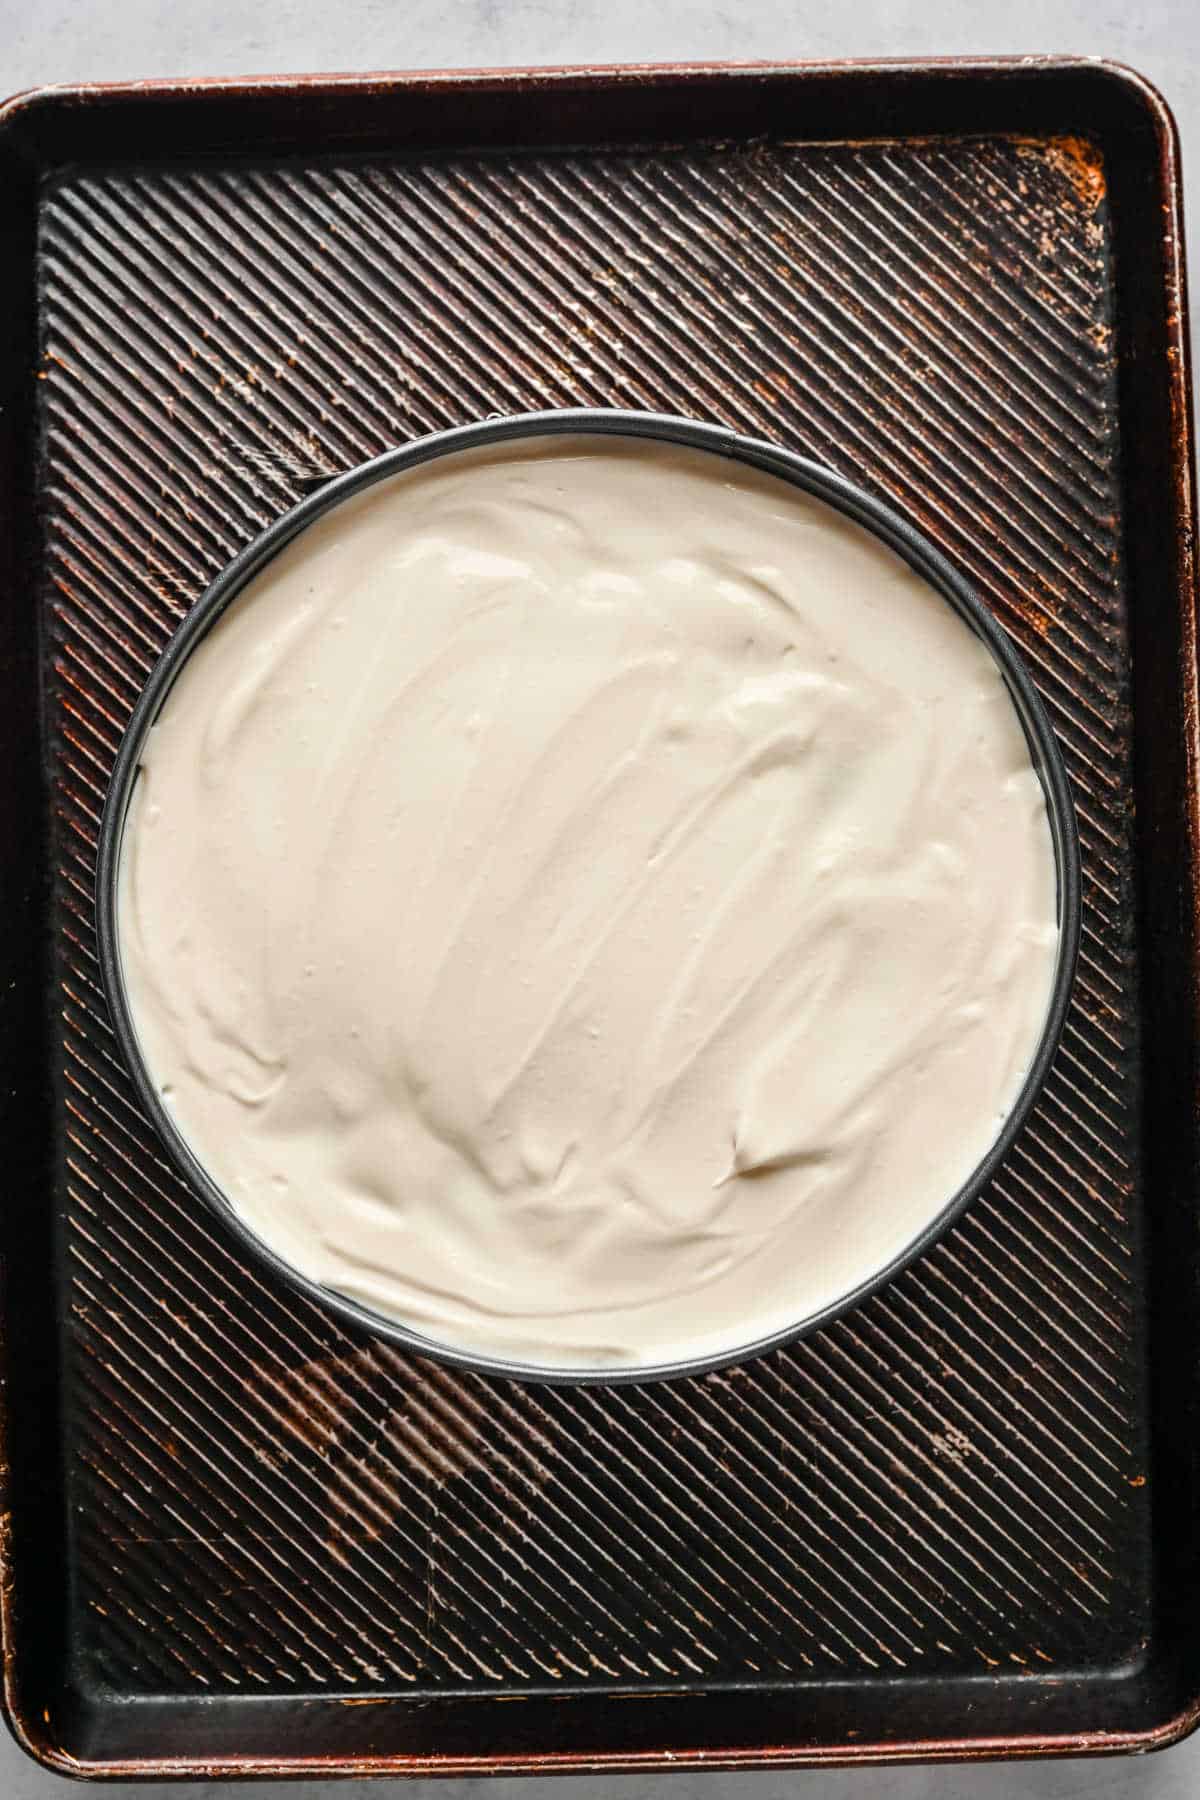 Cream cheese mixture spread over a pumpkin cheesecake.